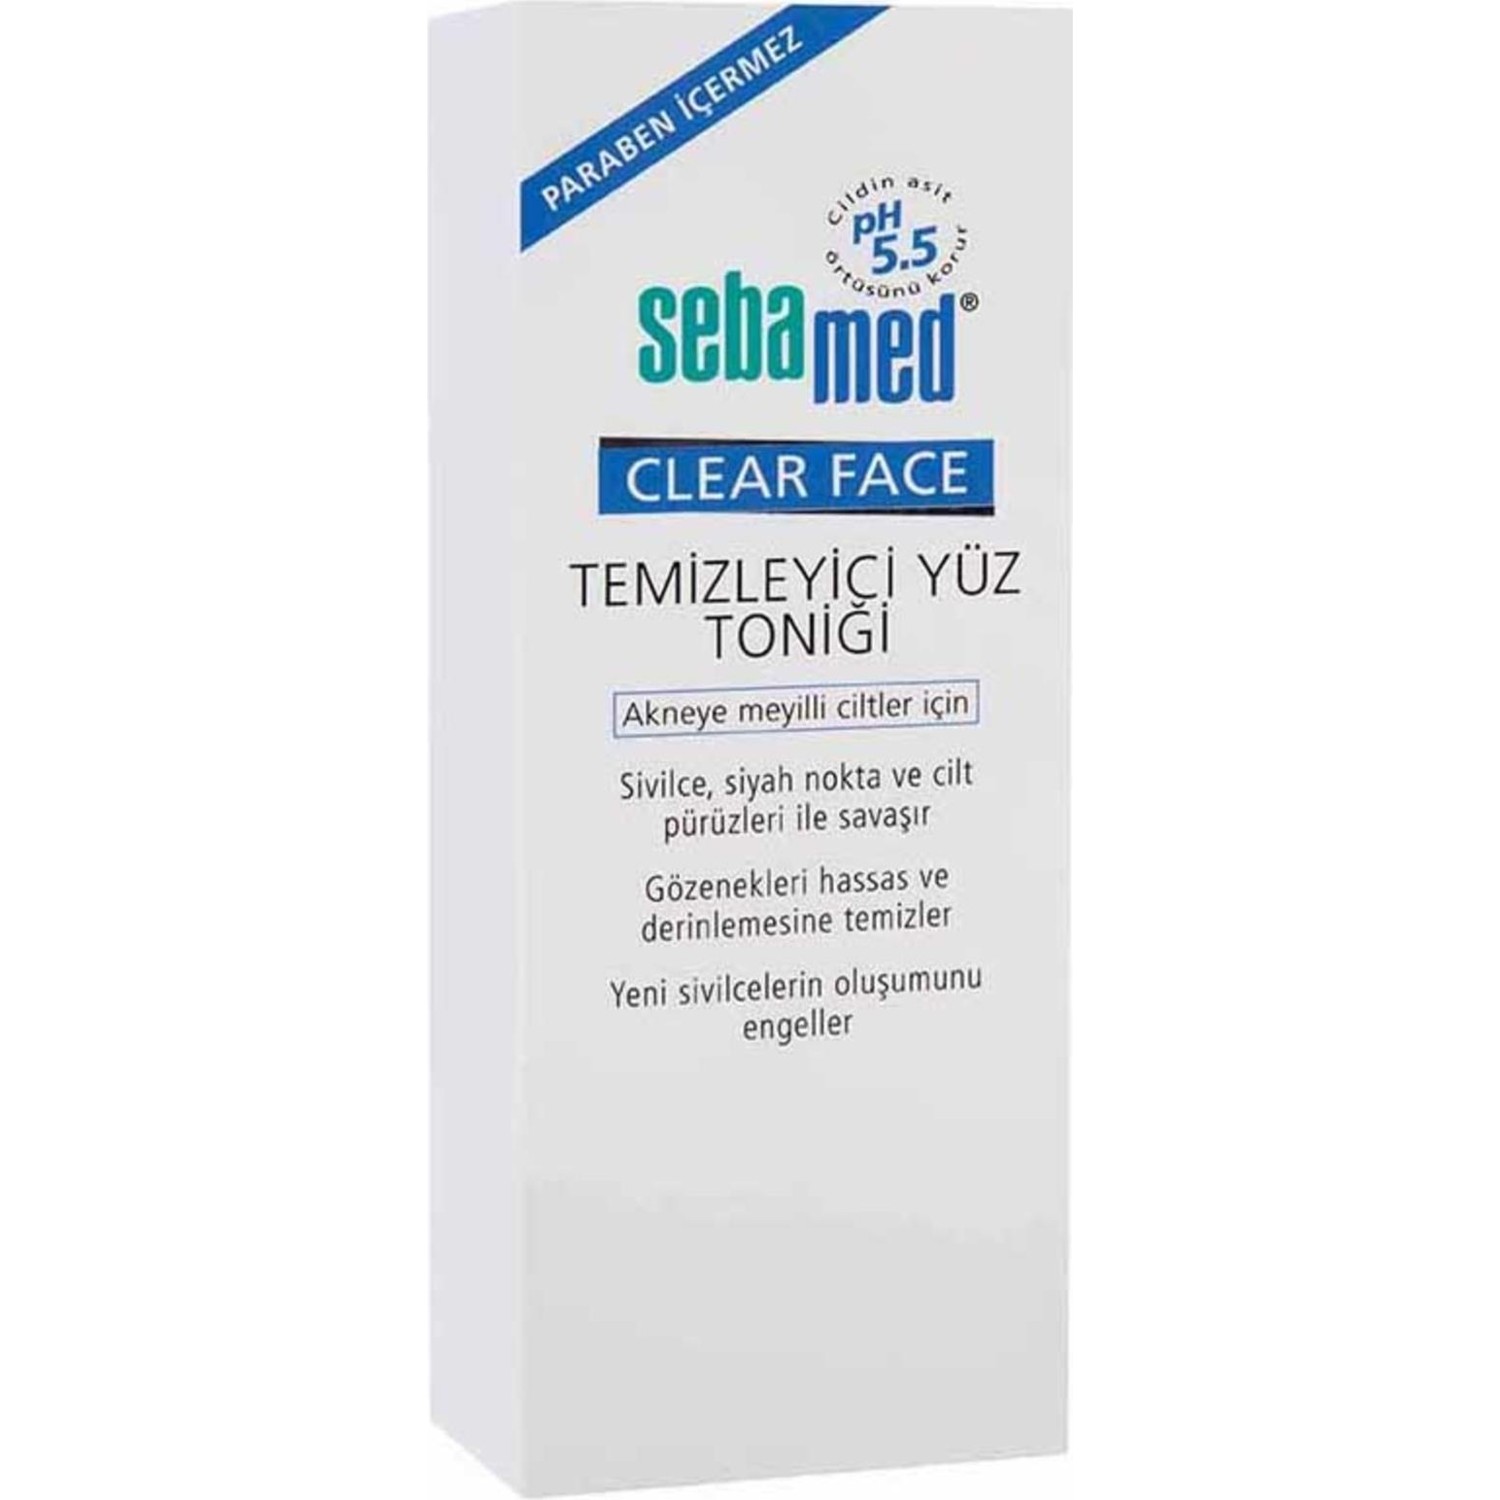 Очищающий тоник для лица Sebamed Clear Face, 150 мл skinceuticals blemish age toner очищающий тоник для лица